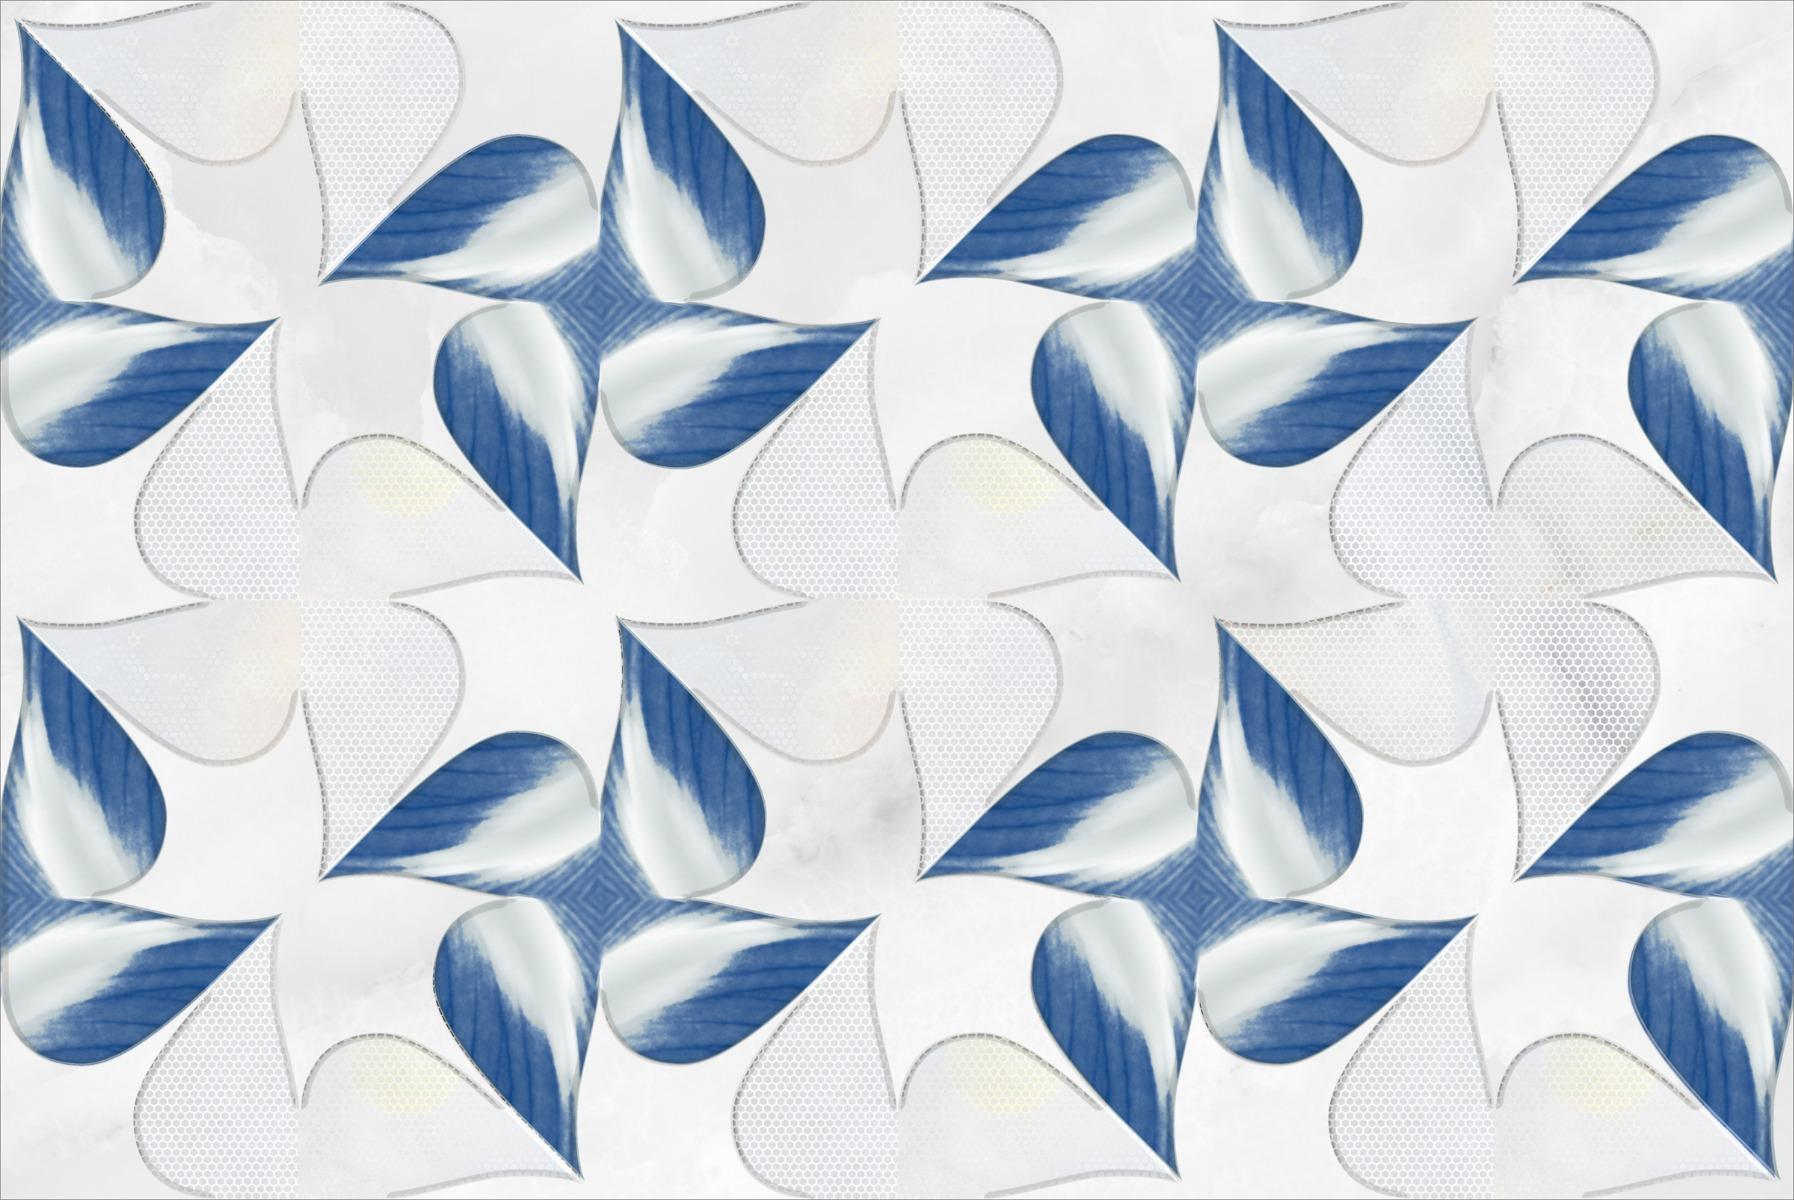 Grey Tiles for Bathroom Tiles, Kitchen Tiles, Accent Tiles, Dining Room Tiles